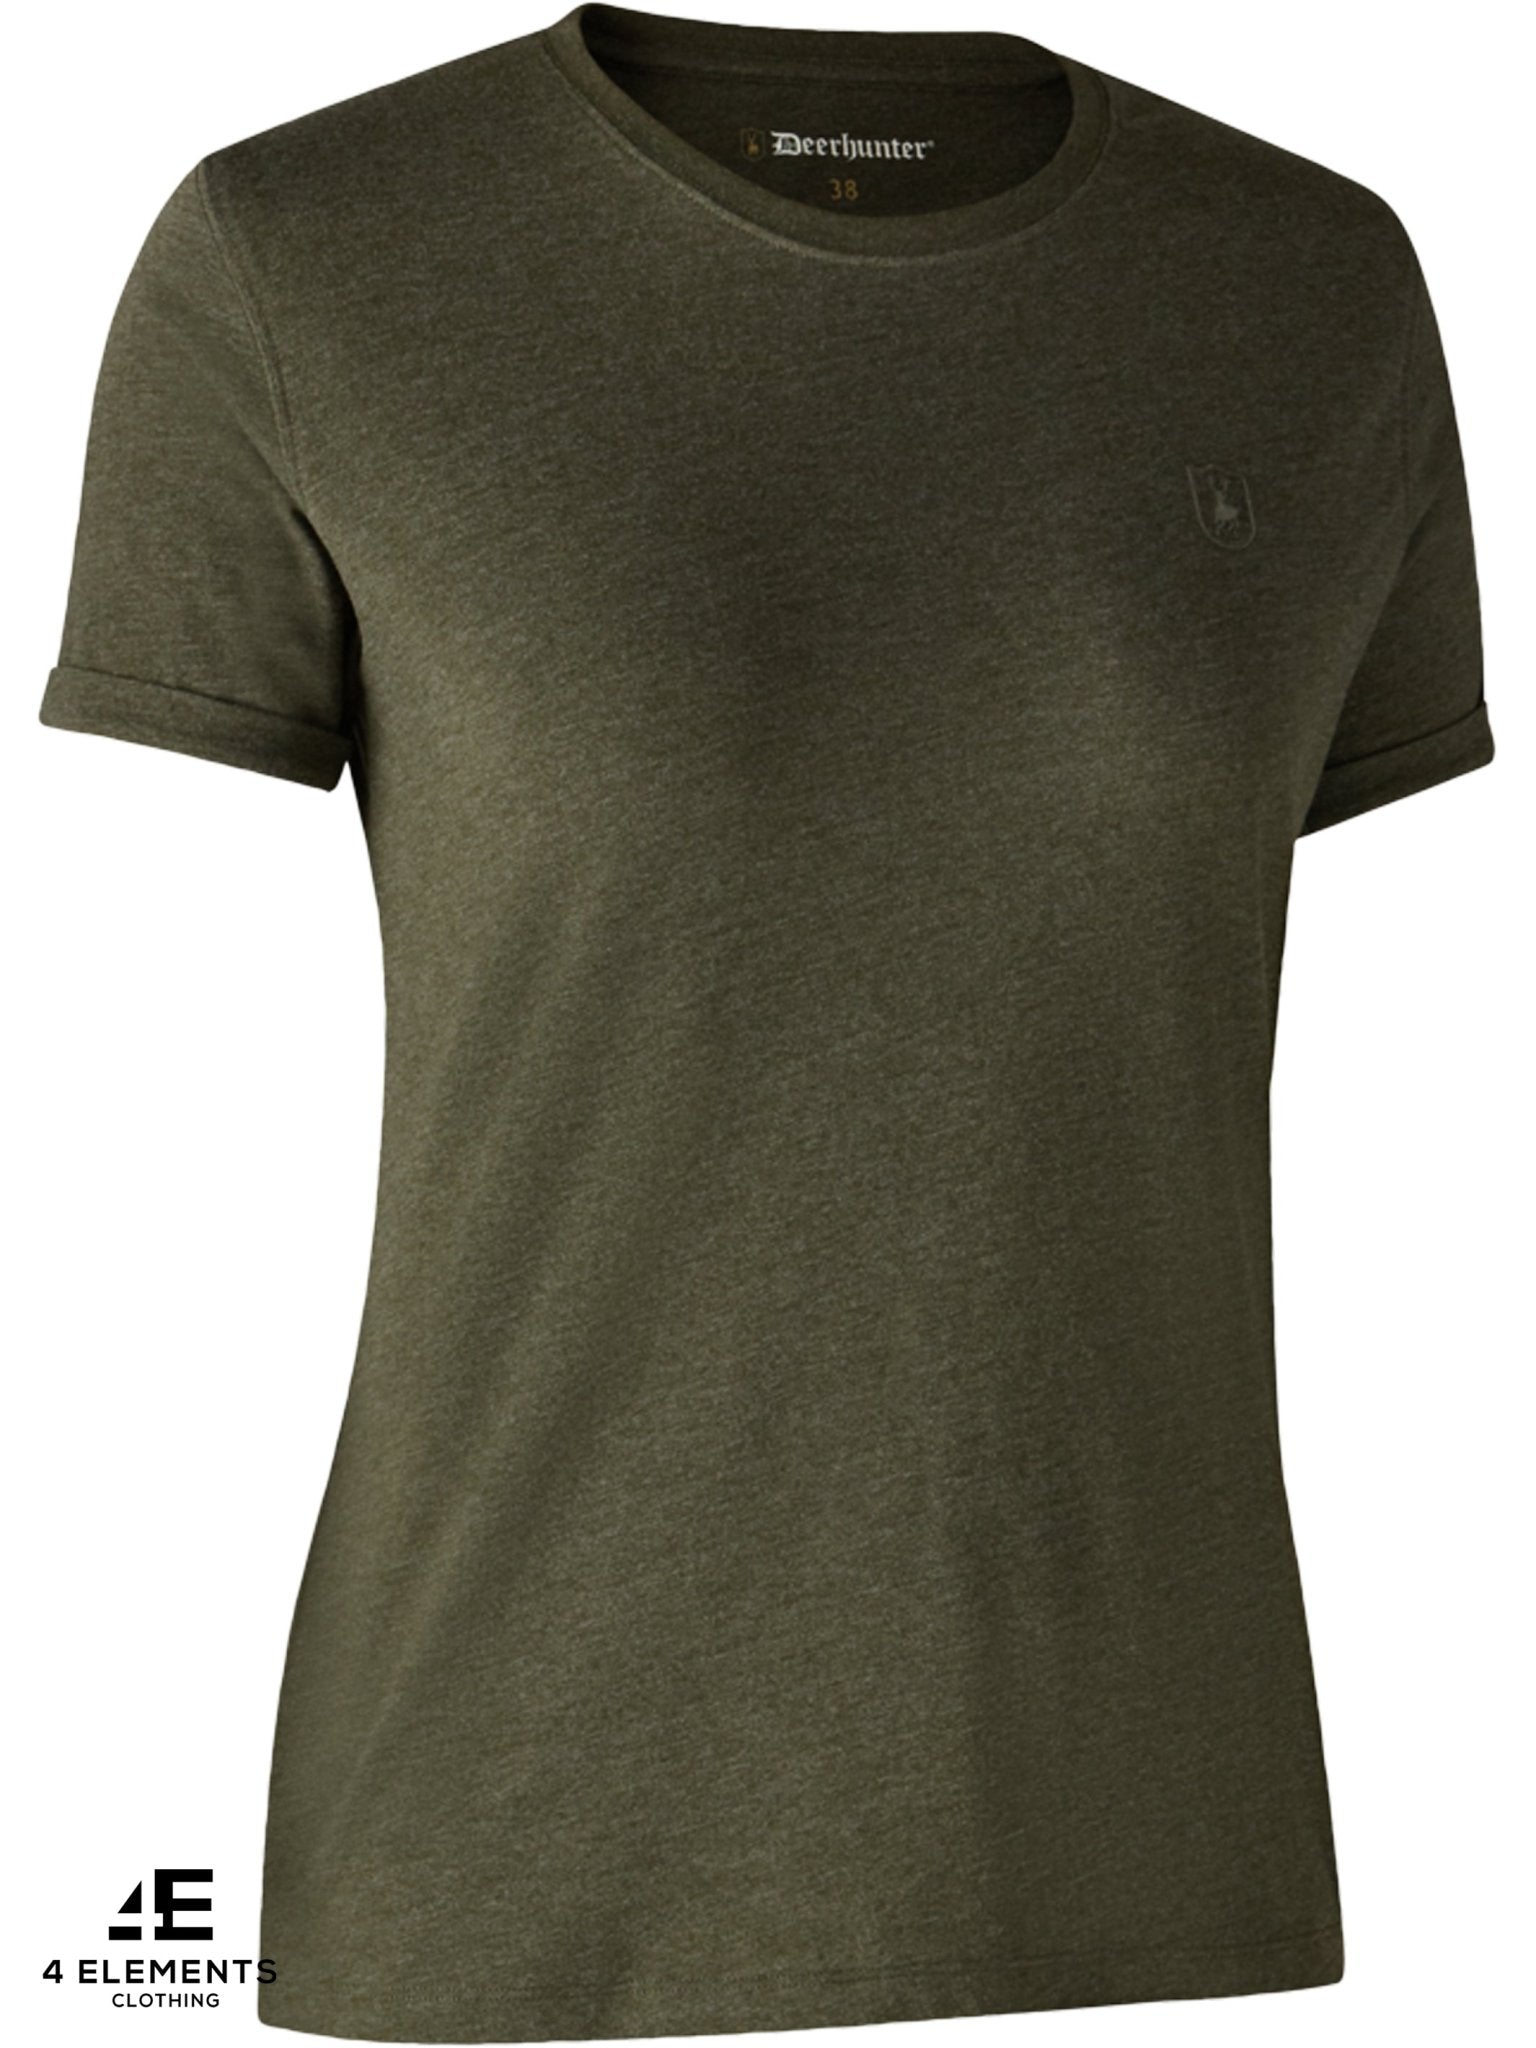 4elementsclothingDeerhunterDeerhunter - Ladies Basic 2-pack T-shirt / Ladies tee shirtsT-Shirt8395-354-36